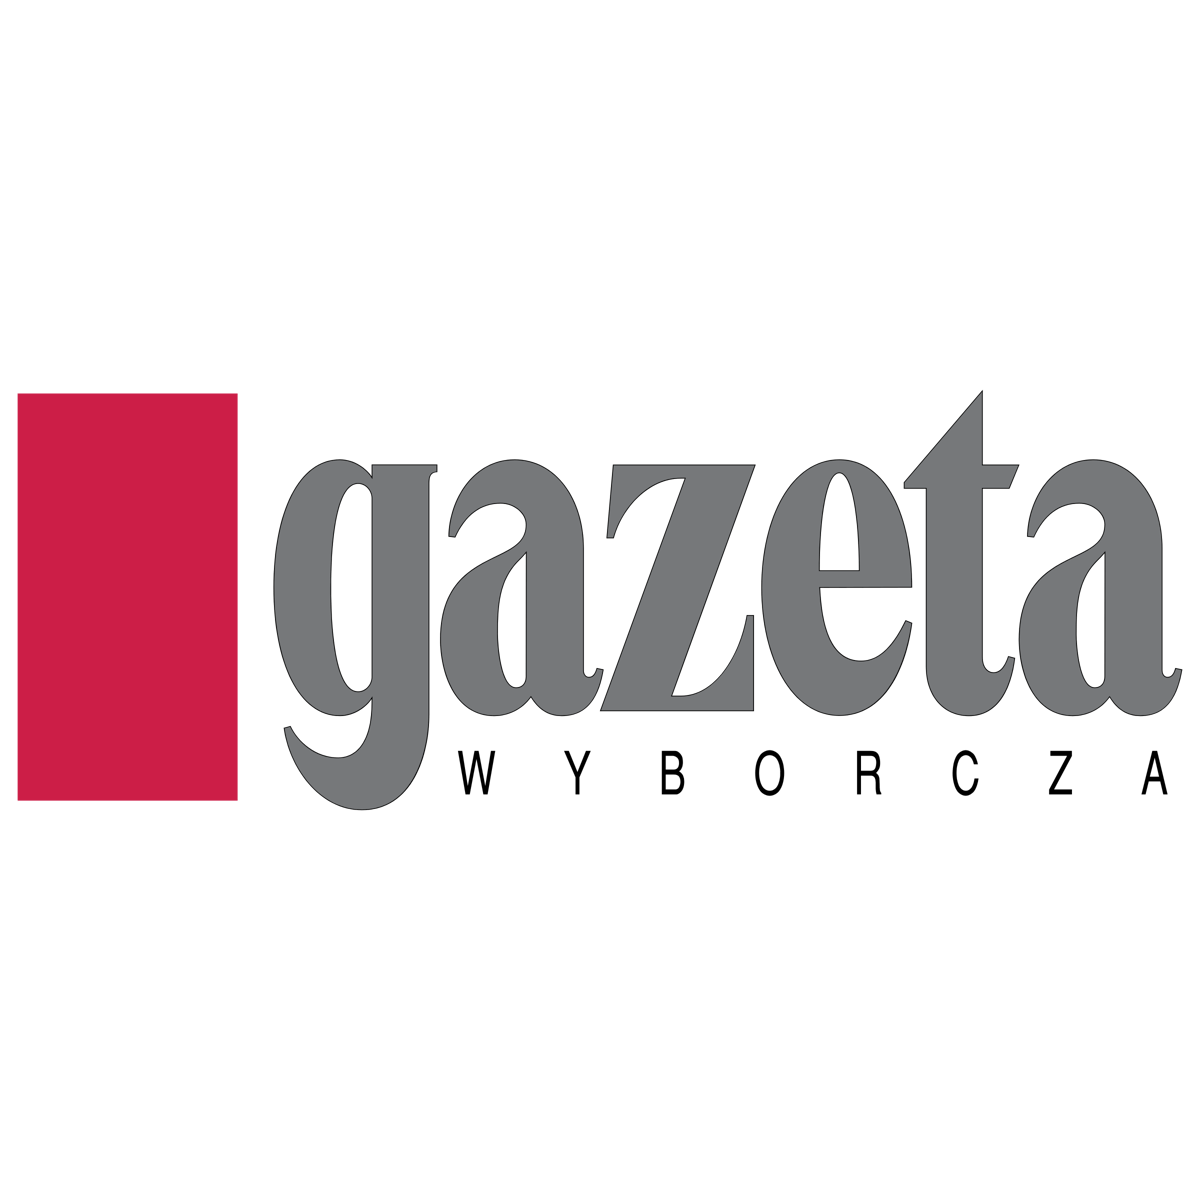 gazeta-wyborcza-logo-png-transparent